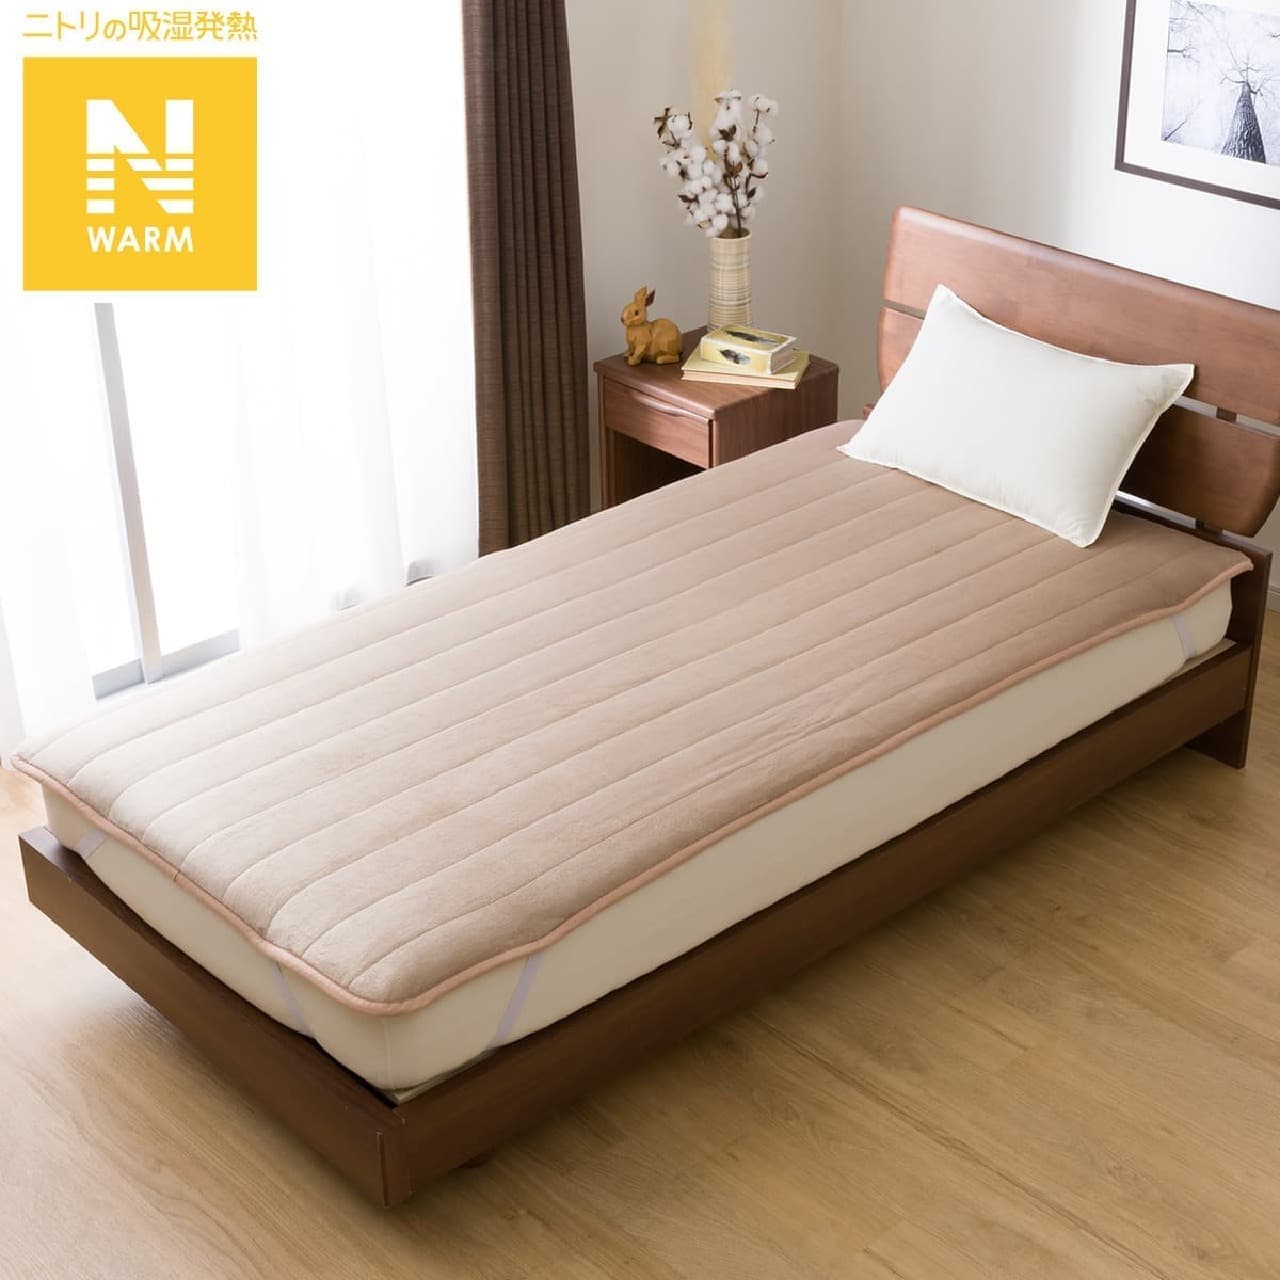 Nitori "Electric pad N-Warm (mattress pad type)